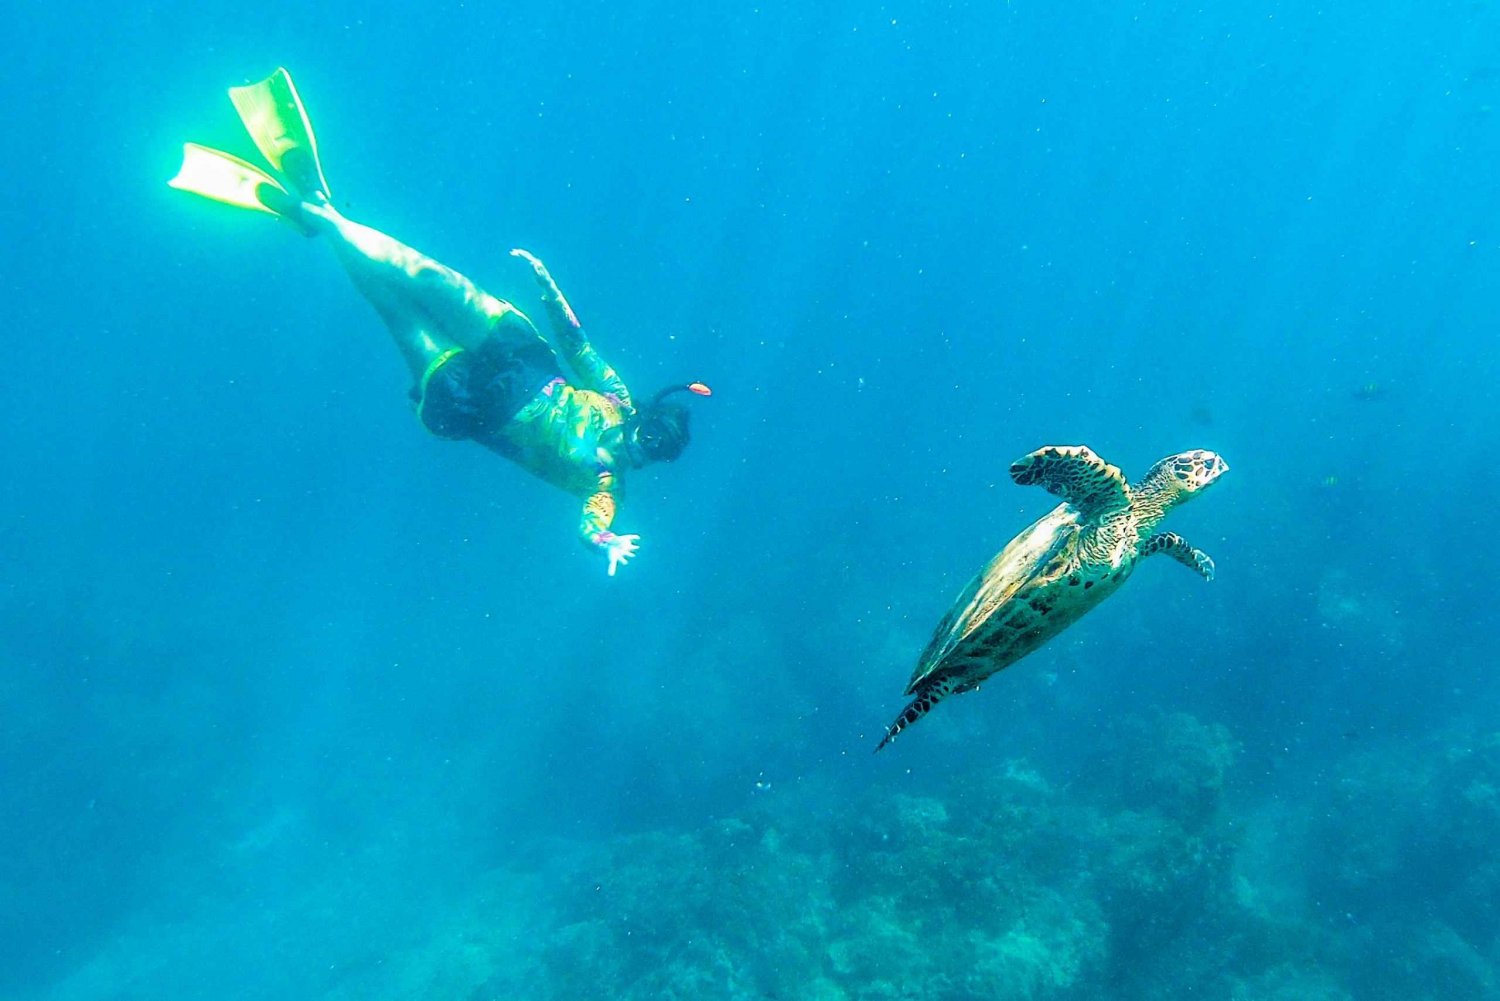 Caño Island Biological Reserve - Snorkeling or Diving